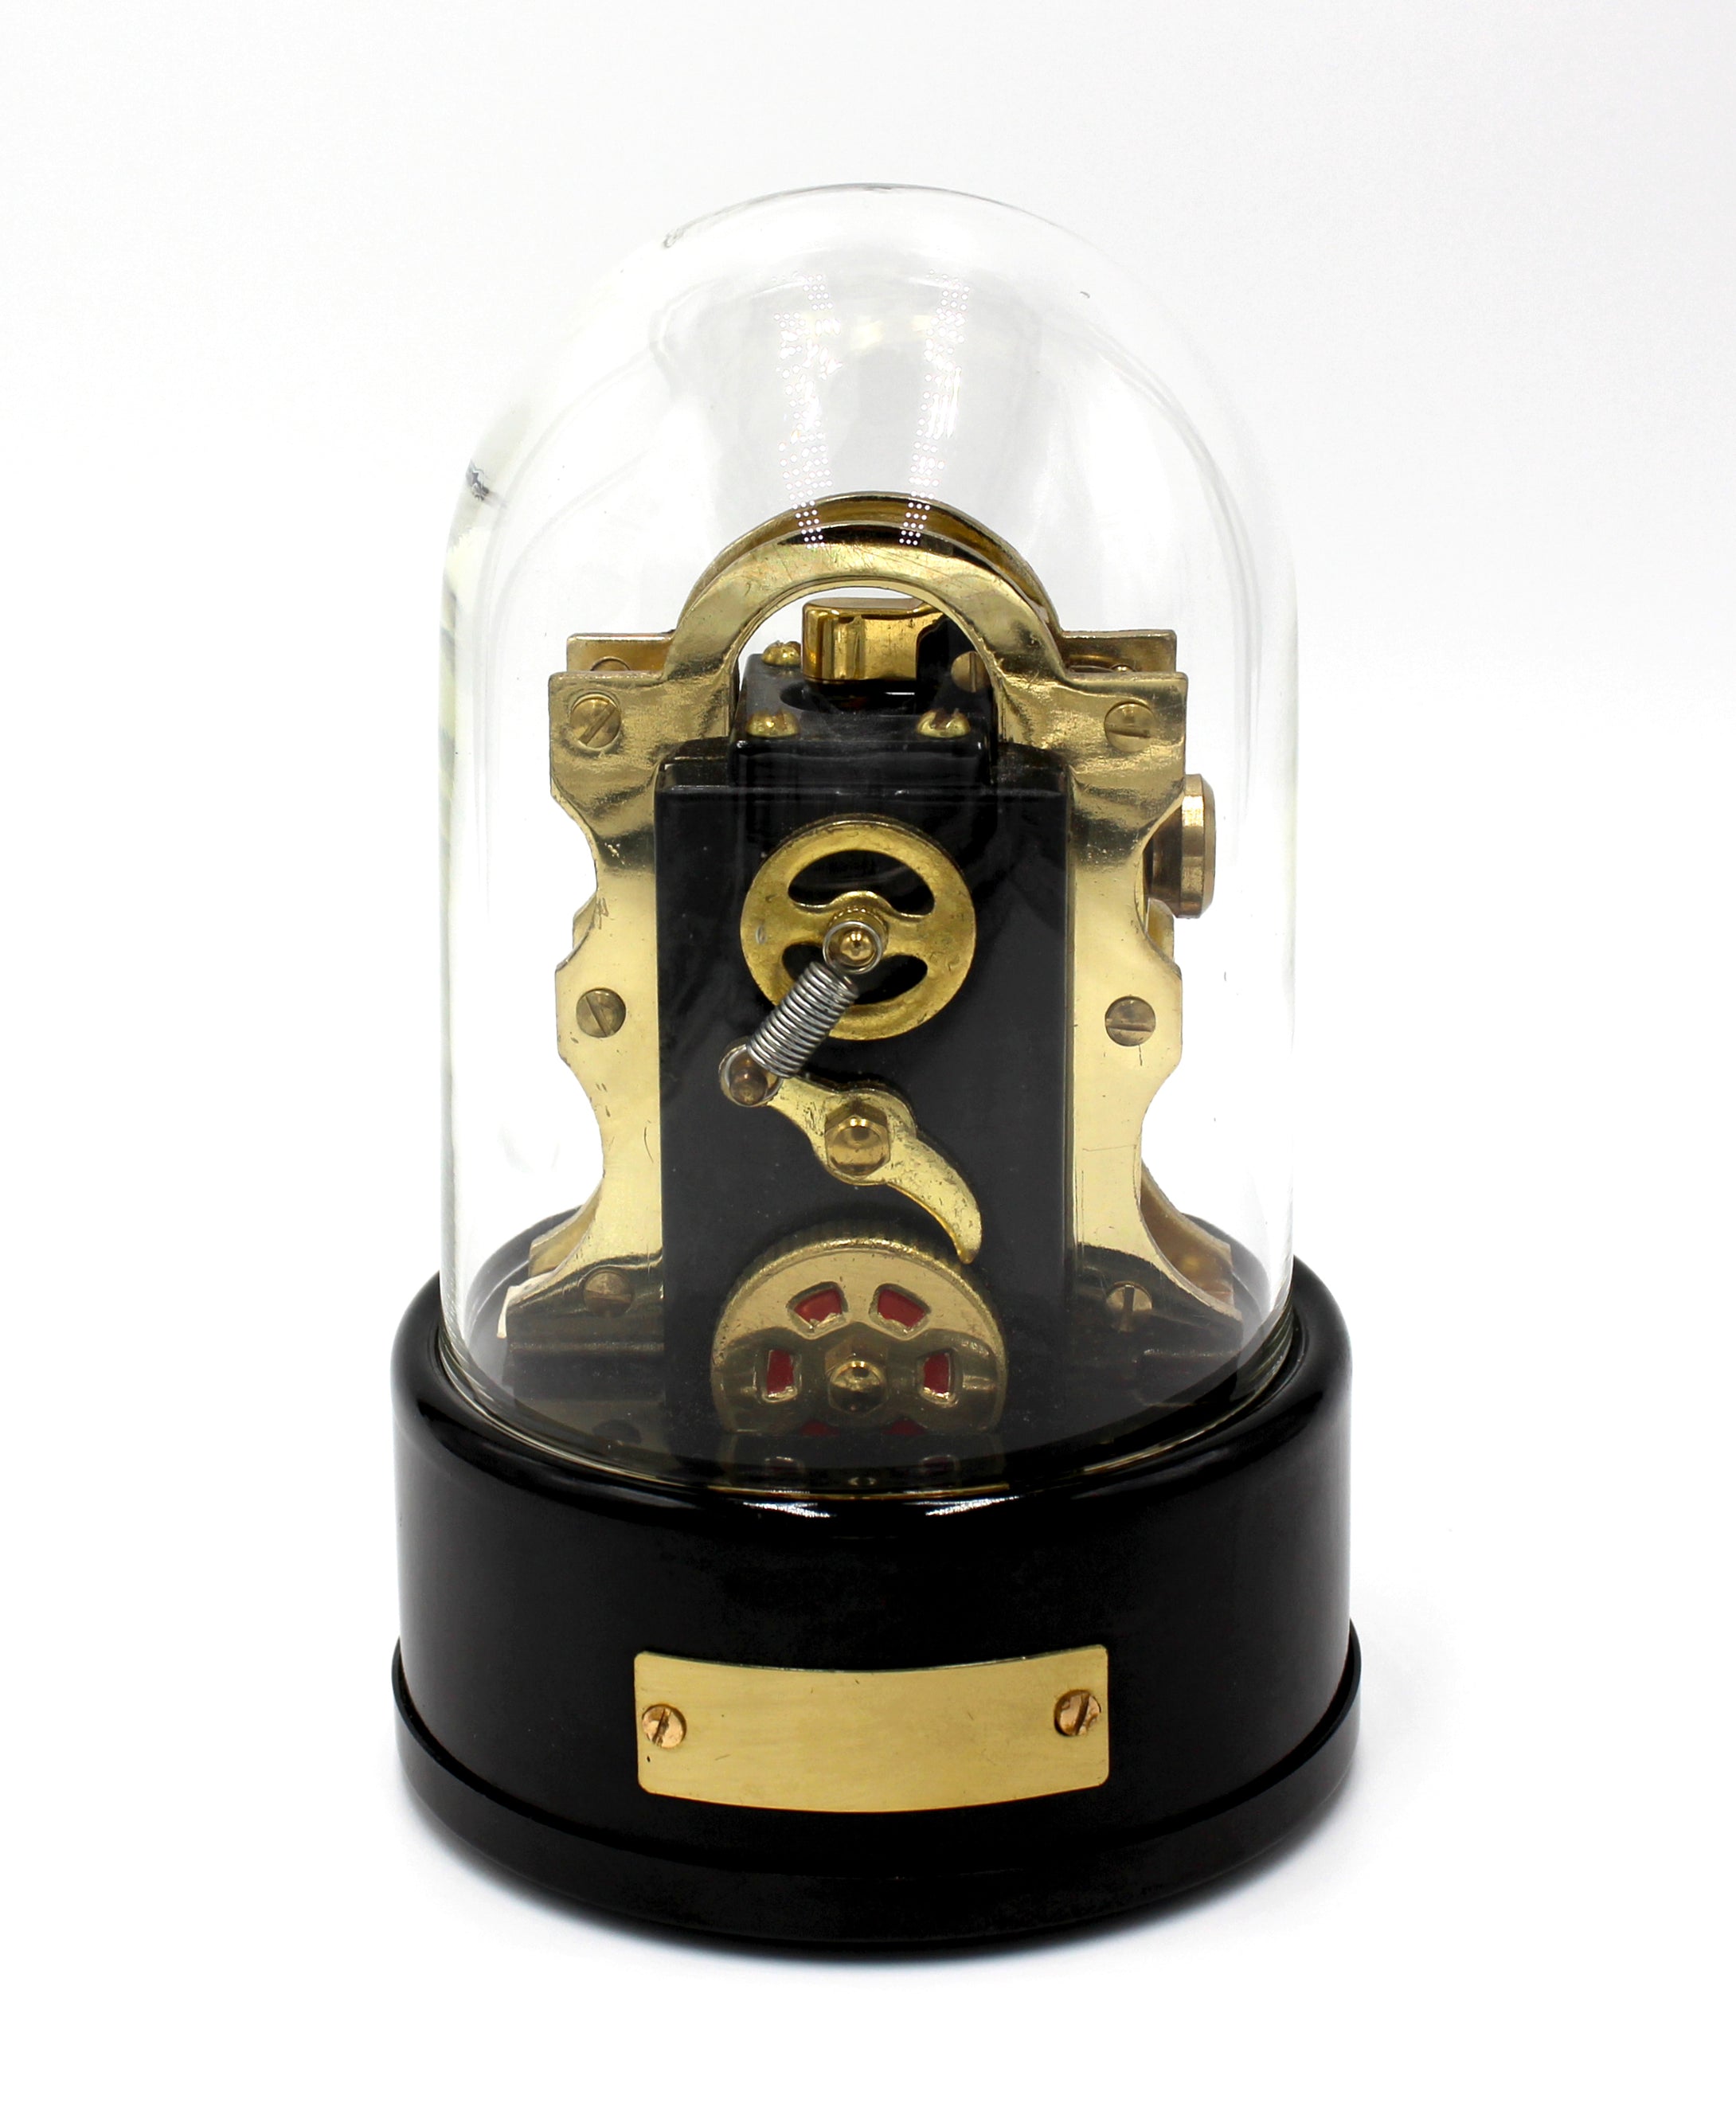 Vintage Edison Stock Ticker Tape Machine Replica Lighter - Wall Street Treasures